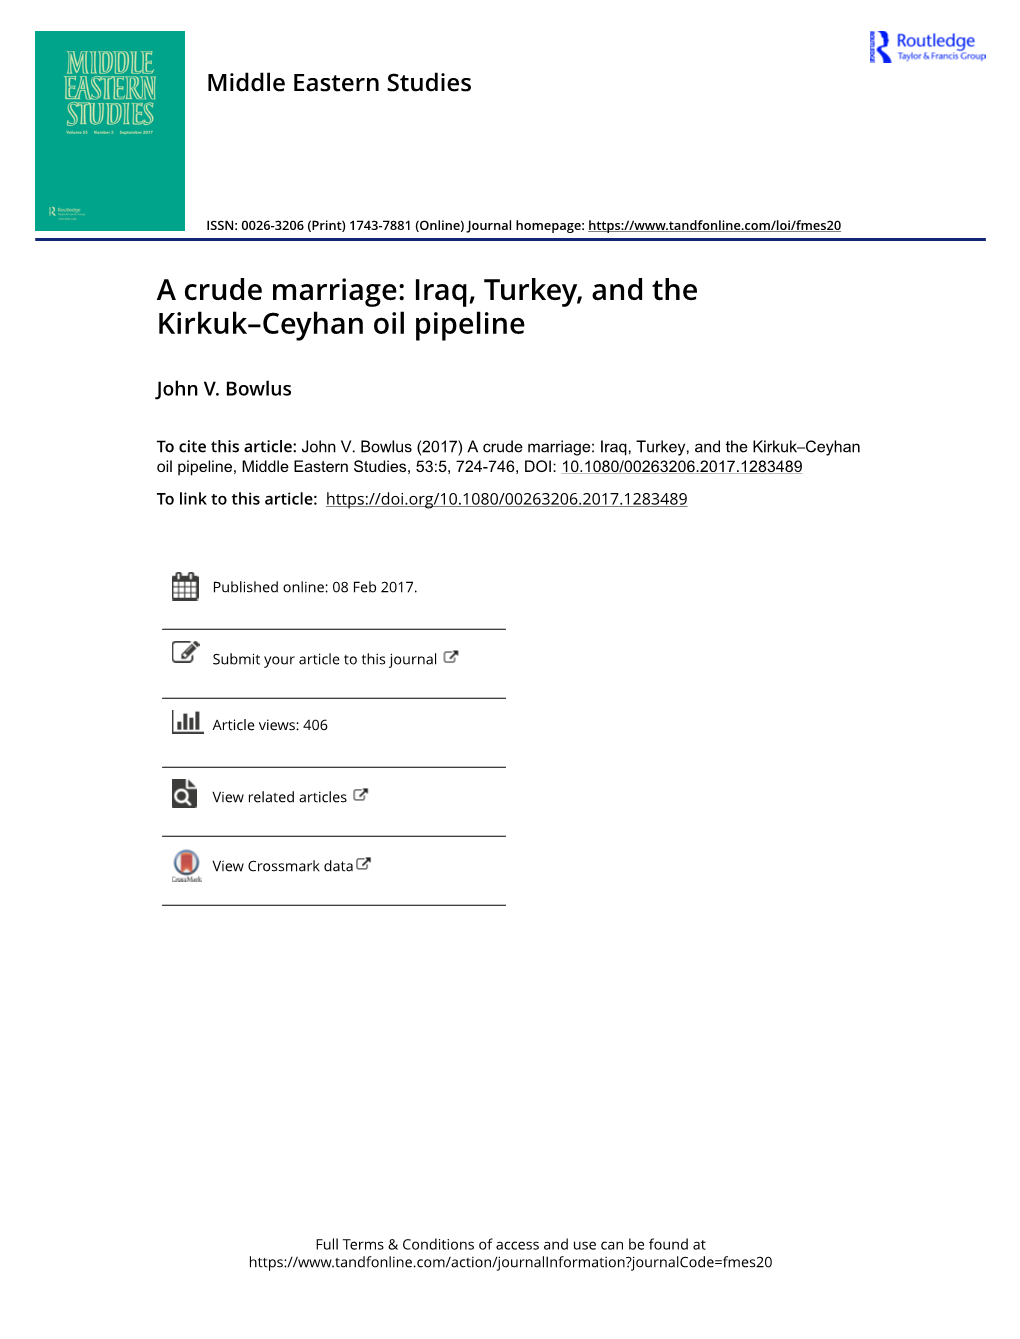 A Crude Marriage: Iraq, Turkey, and the Kirkuk-Ceyhan Oil Pipeline